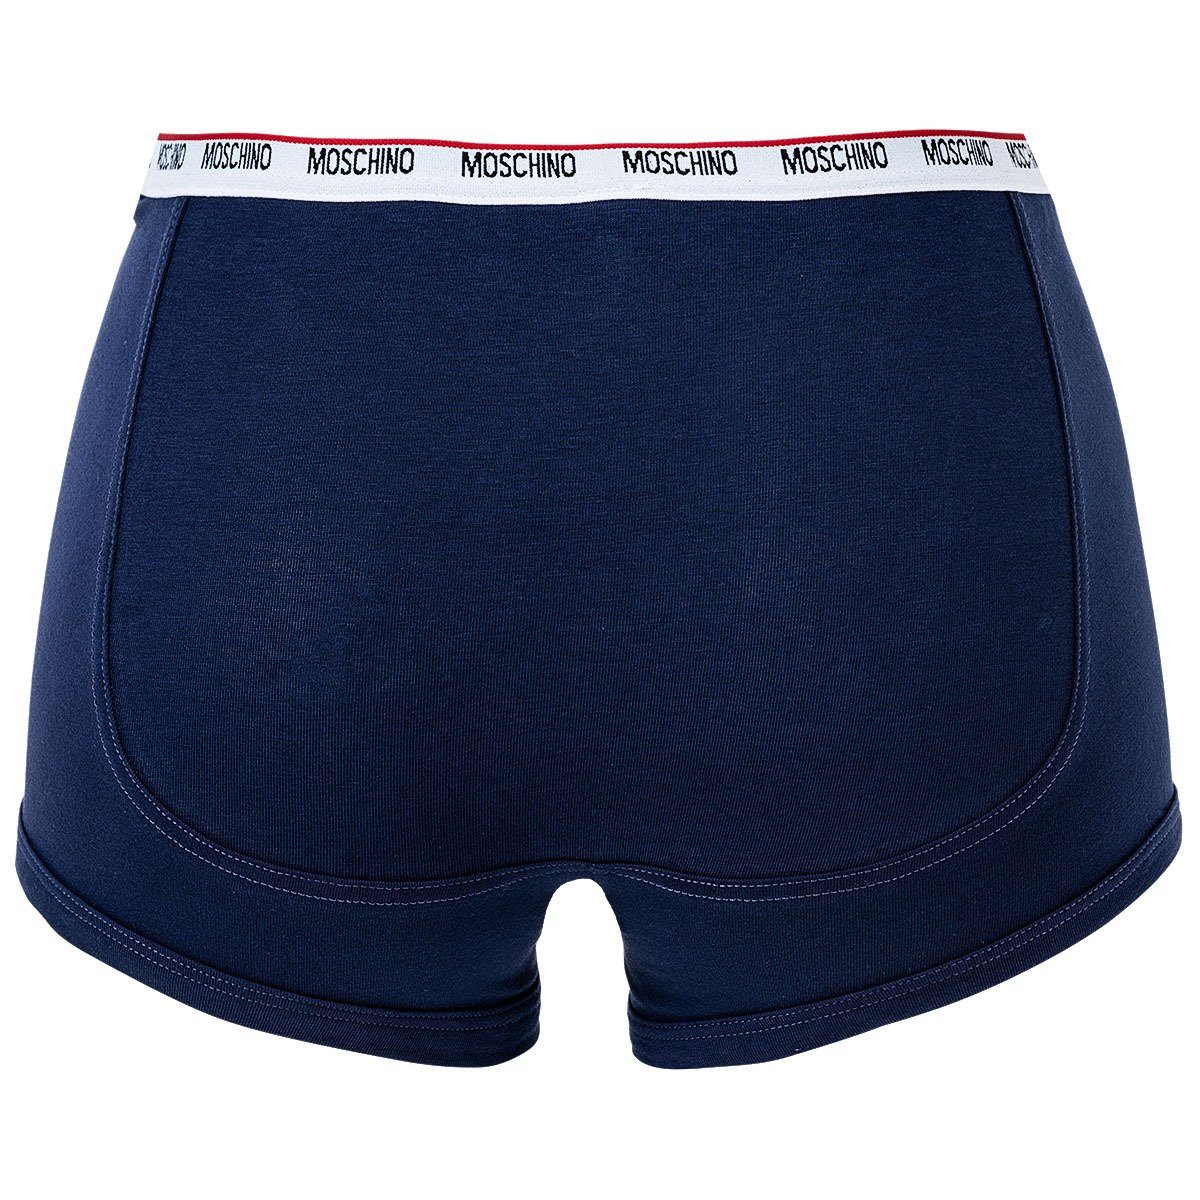 Herren Moschino Blau Boxer Shorts Unterhose, Cotton - 2er Trunks, Pack